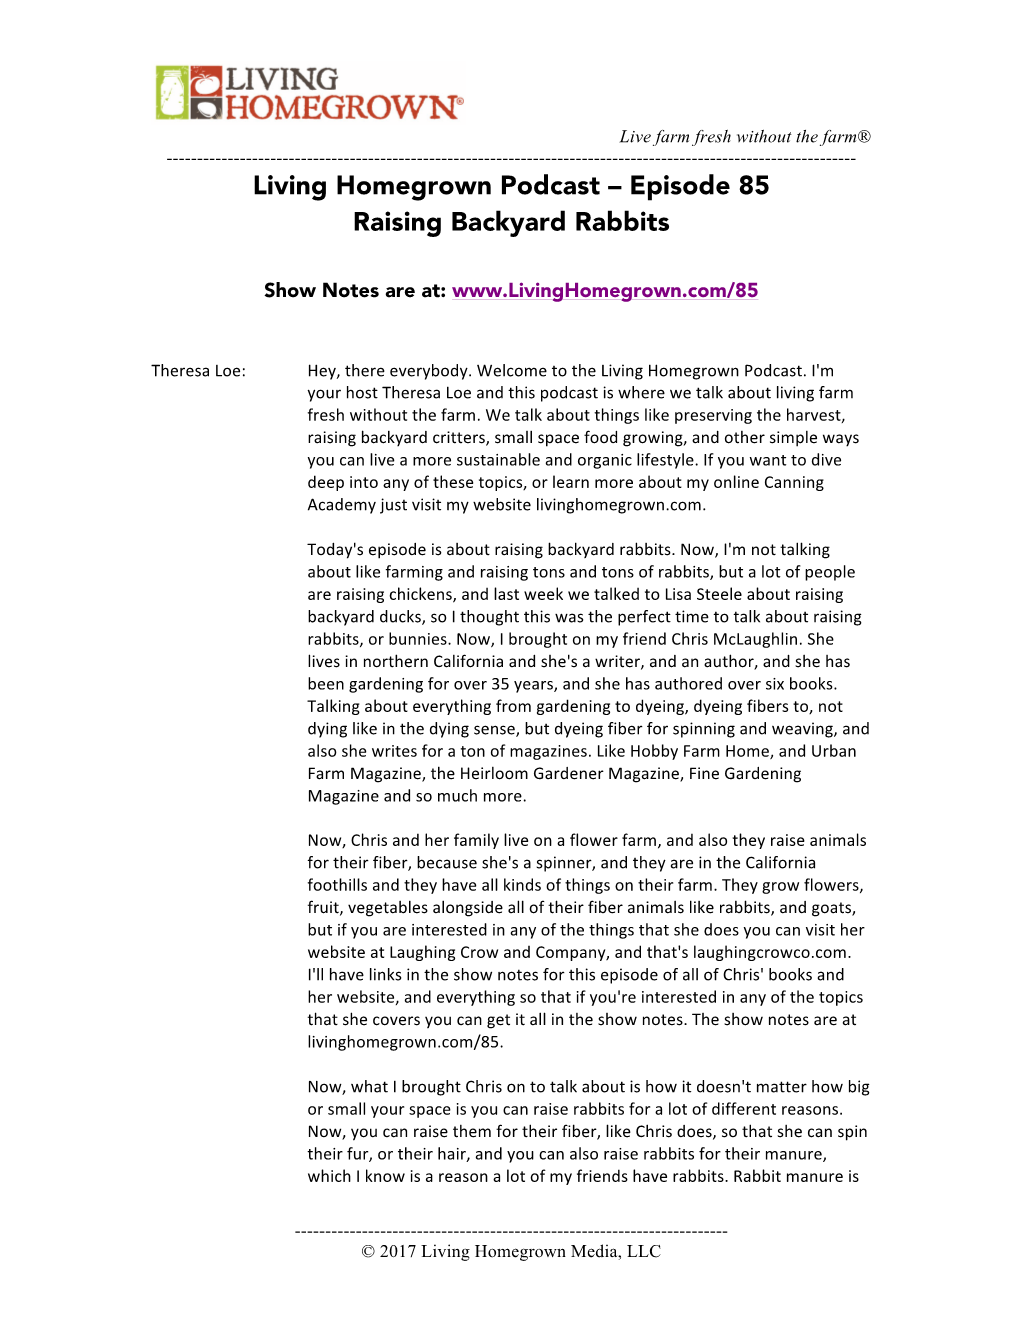 Living Homegrown Podcast – Episode 85 Raising Backyard Rabbits